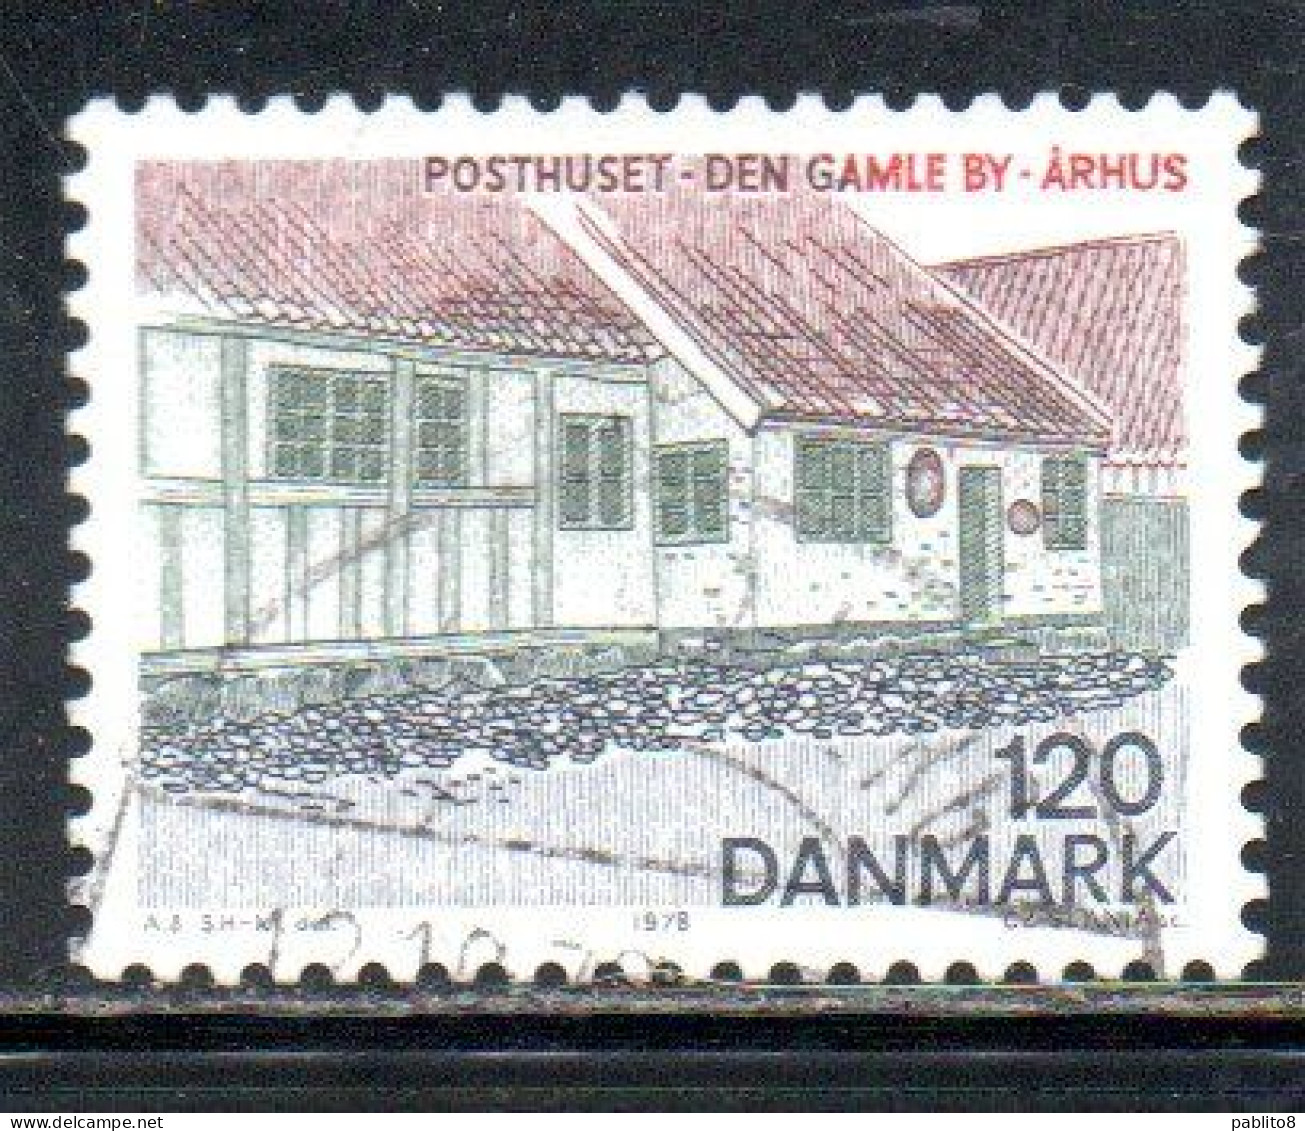 DANEMARK DANMARK DENMARK DANIMARCA 1978 LANDSCAPES CENTRAL JUTLAND POST OFFICE OLD TOWN AARTHUS 120o USED USATO OBLITERE - Oblitérés